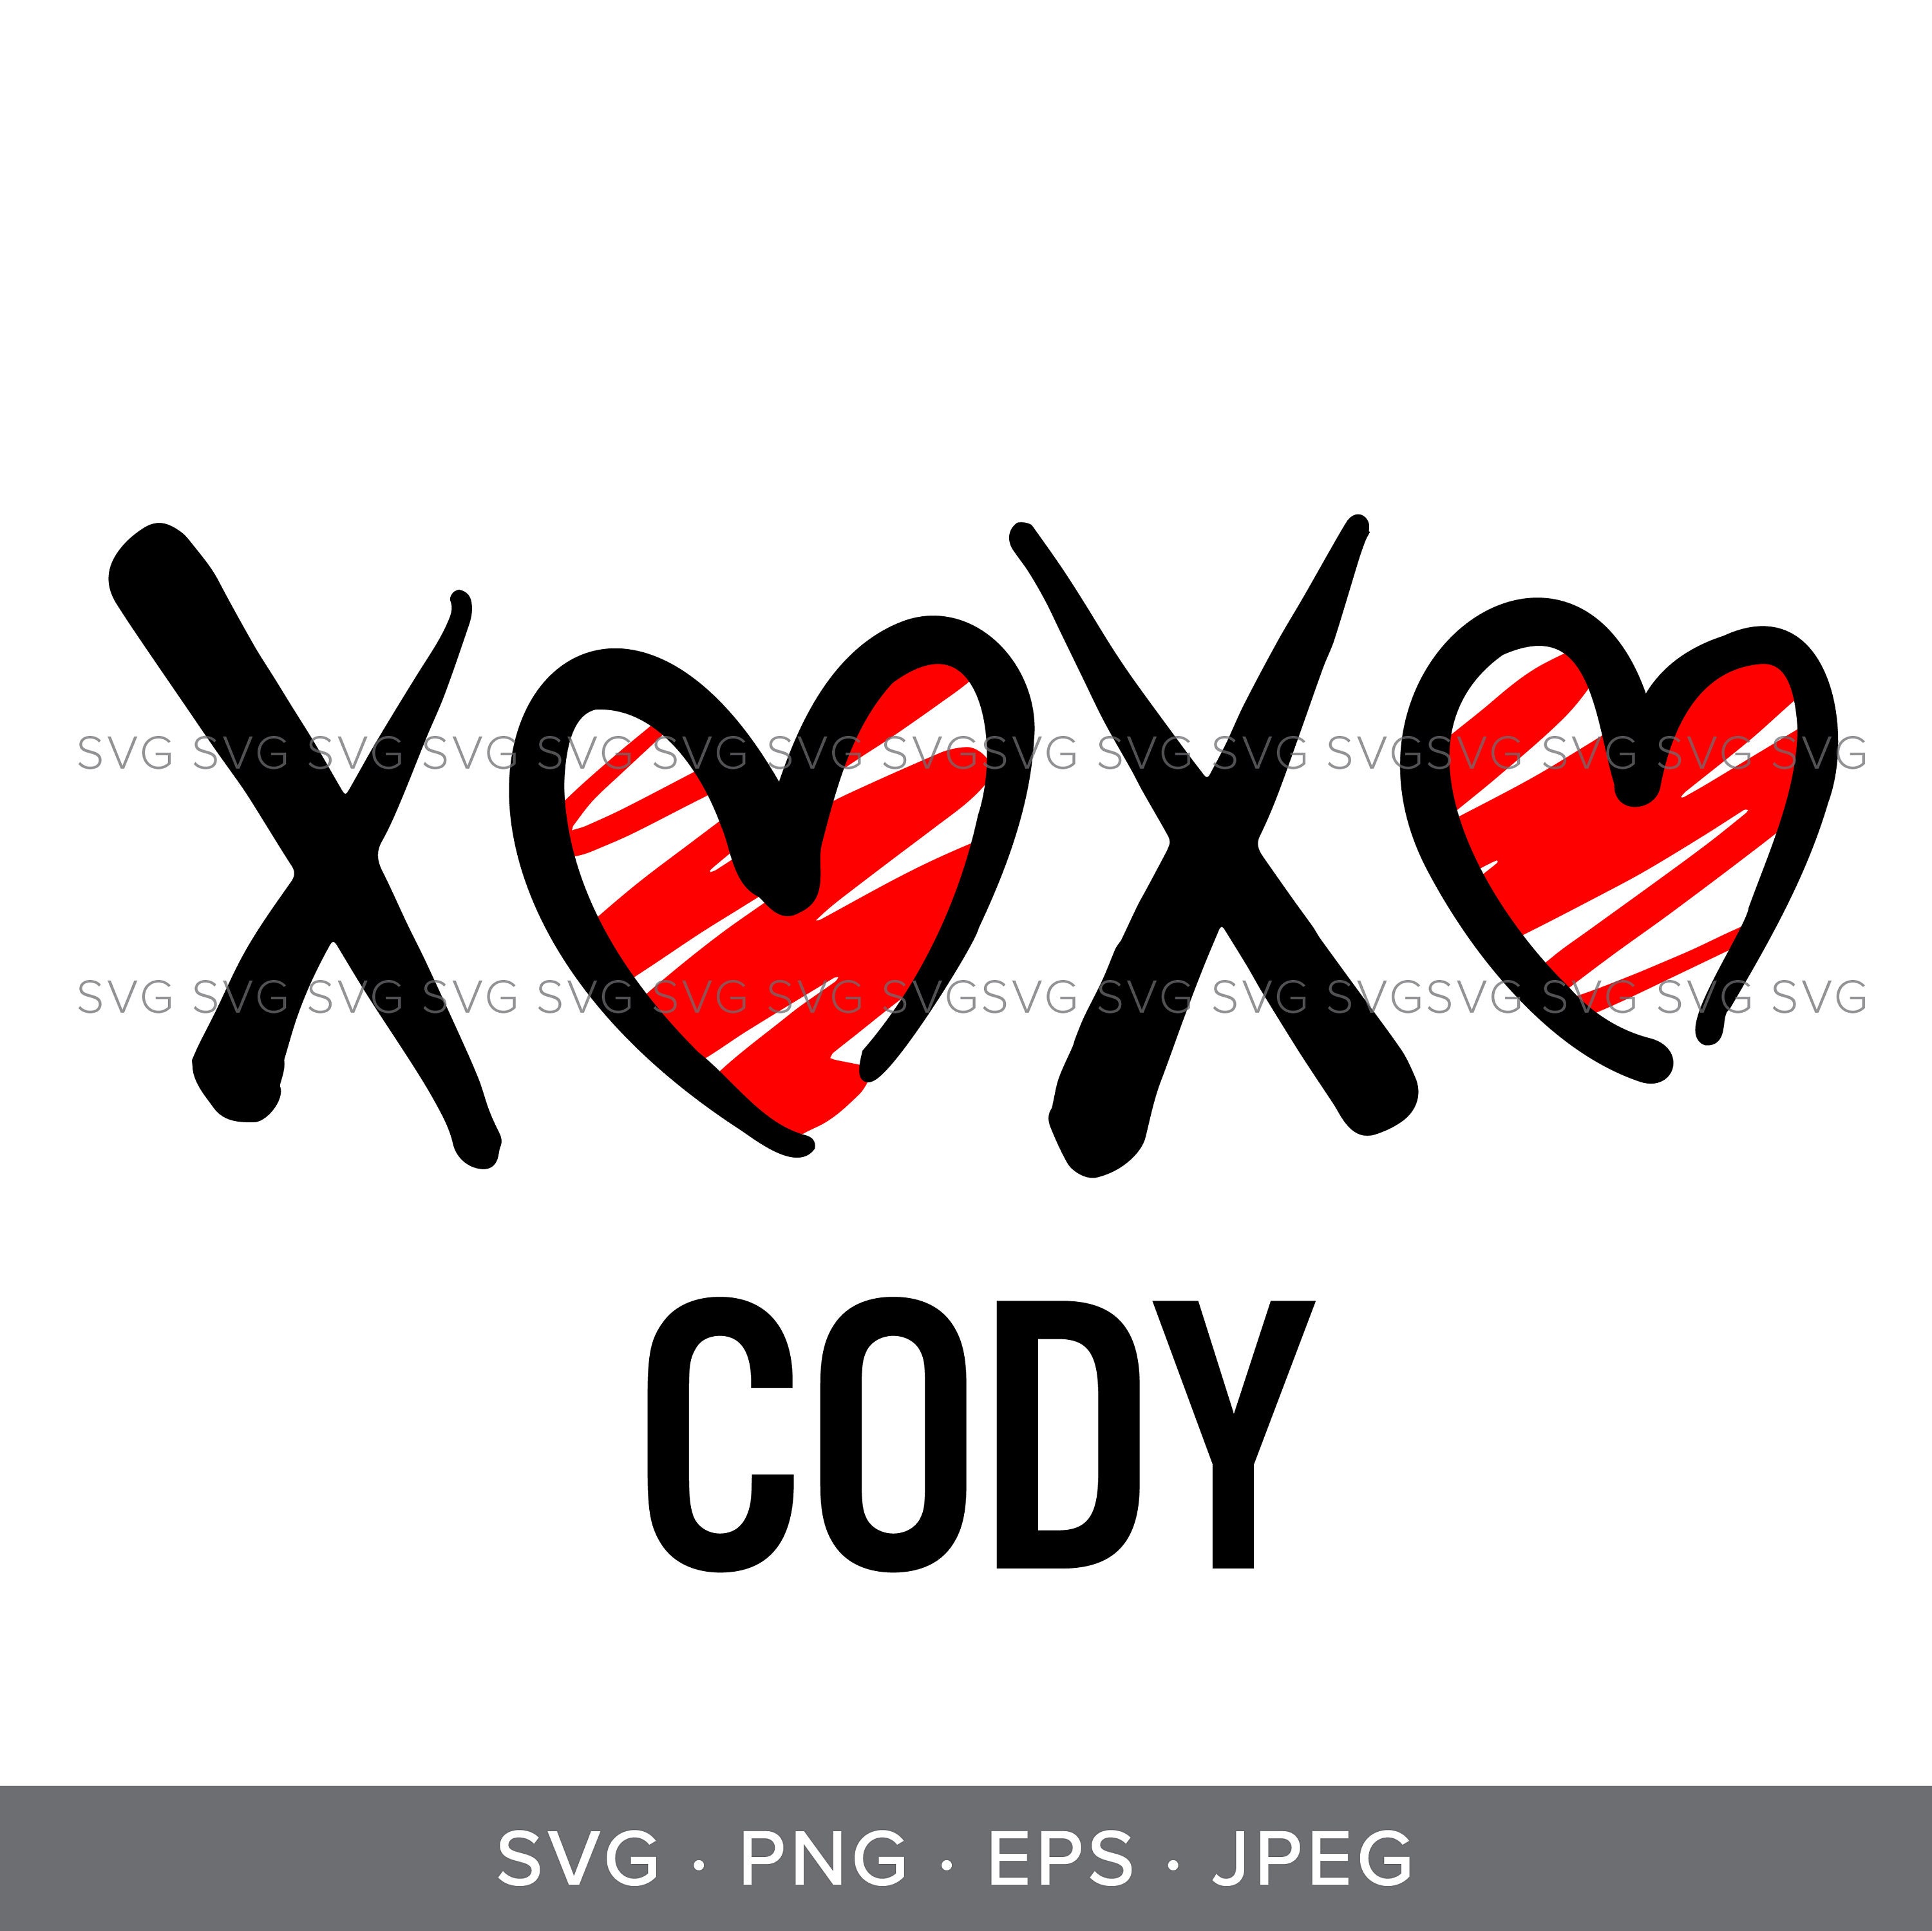 Download Xoxo Cody Svg Peloton Svg Cricut Svg Silhouette Download Etsy